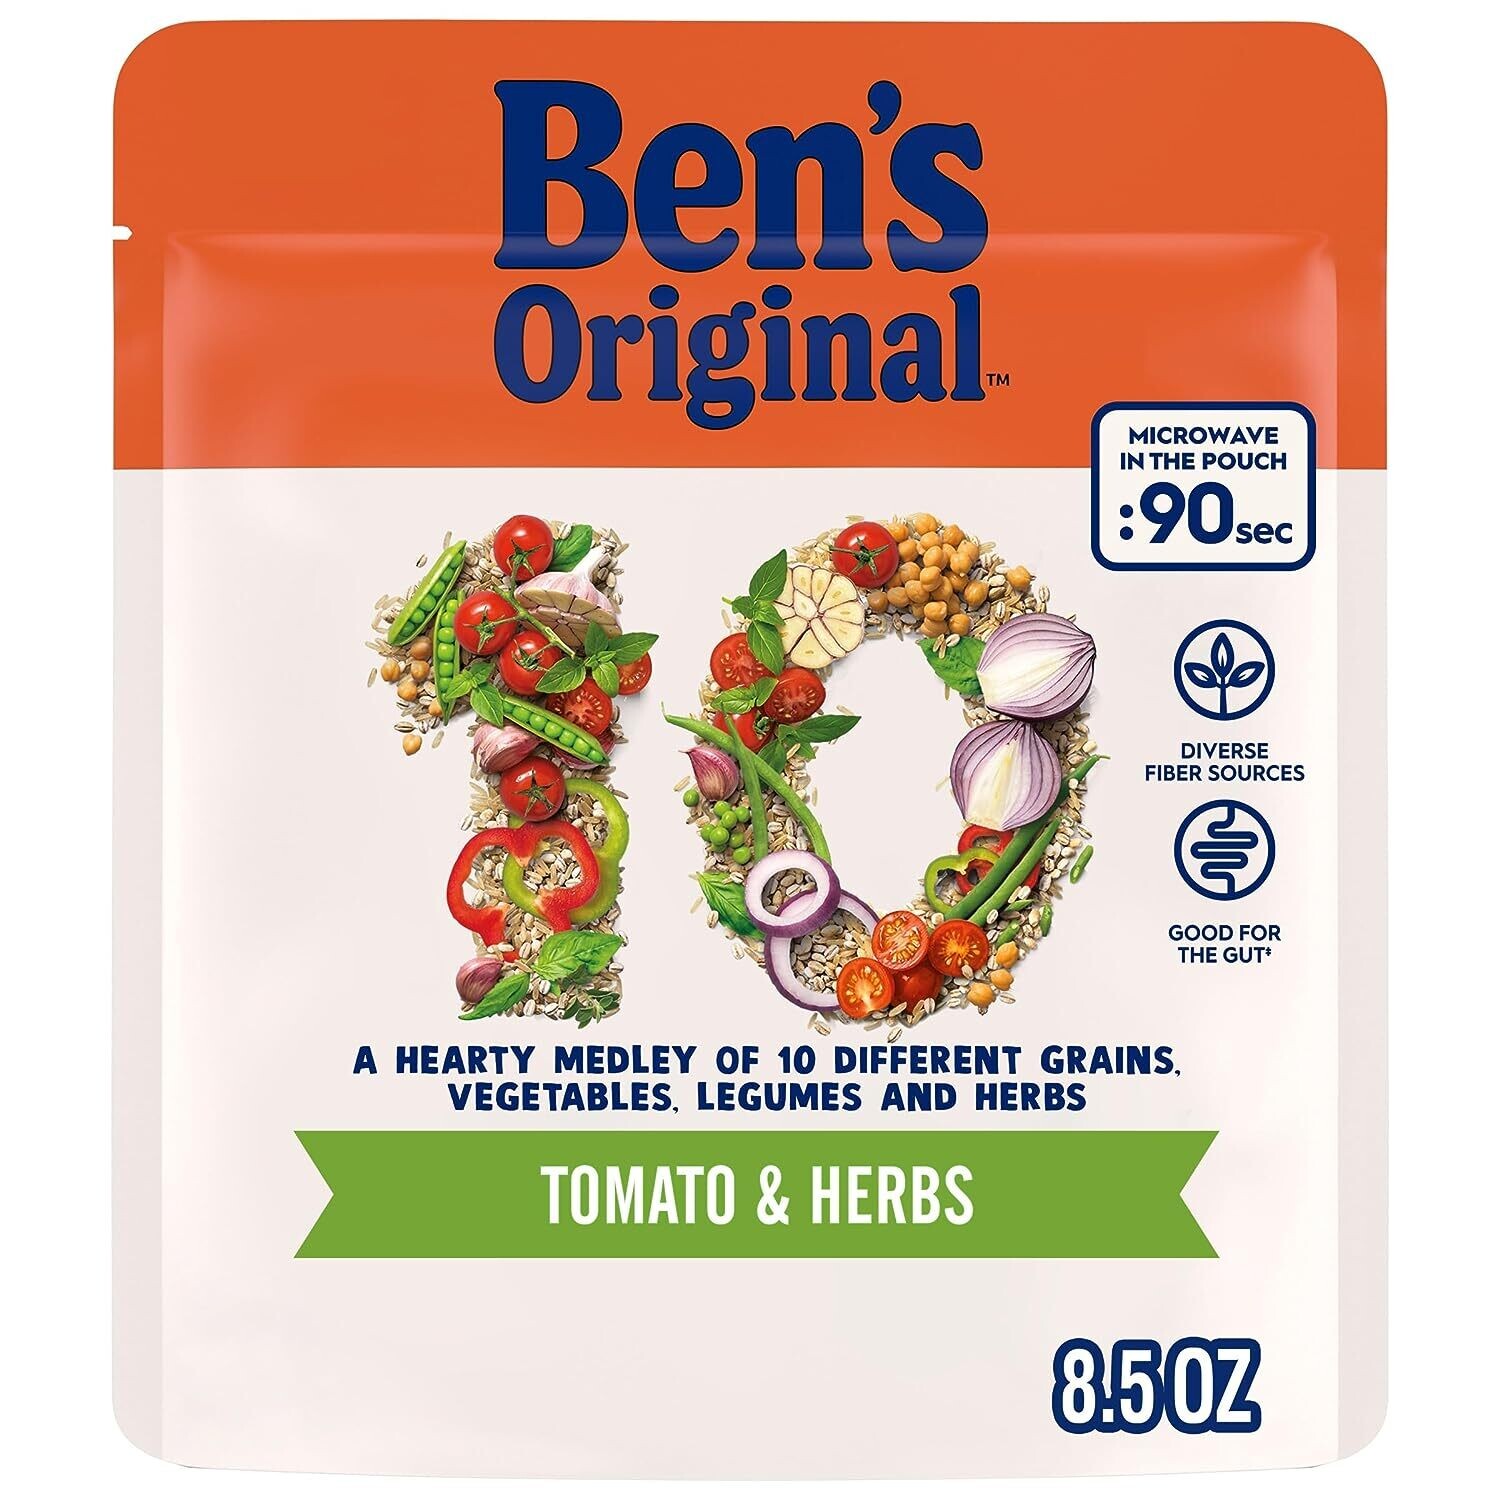 Ben's Original 10 Medley - Tomato & Herbs